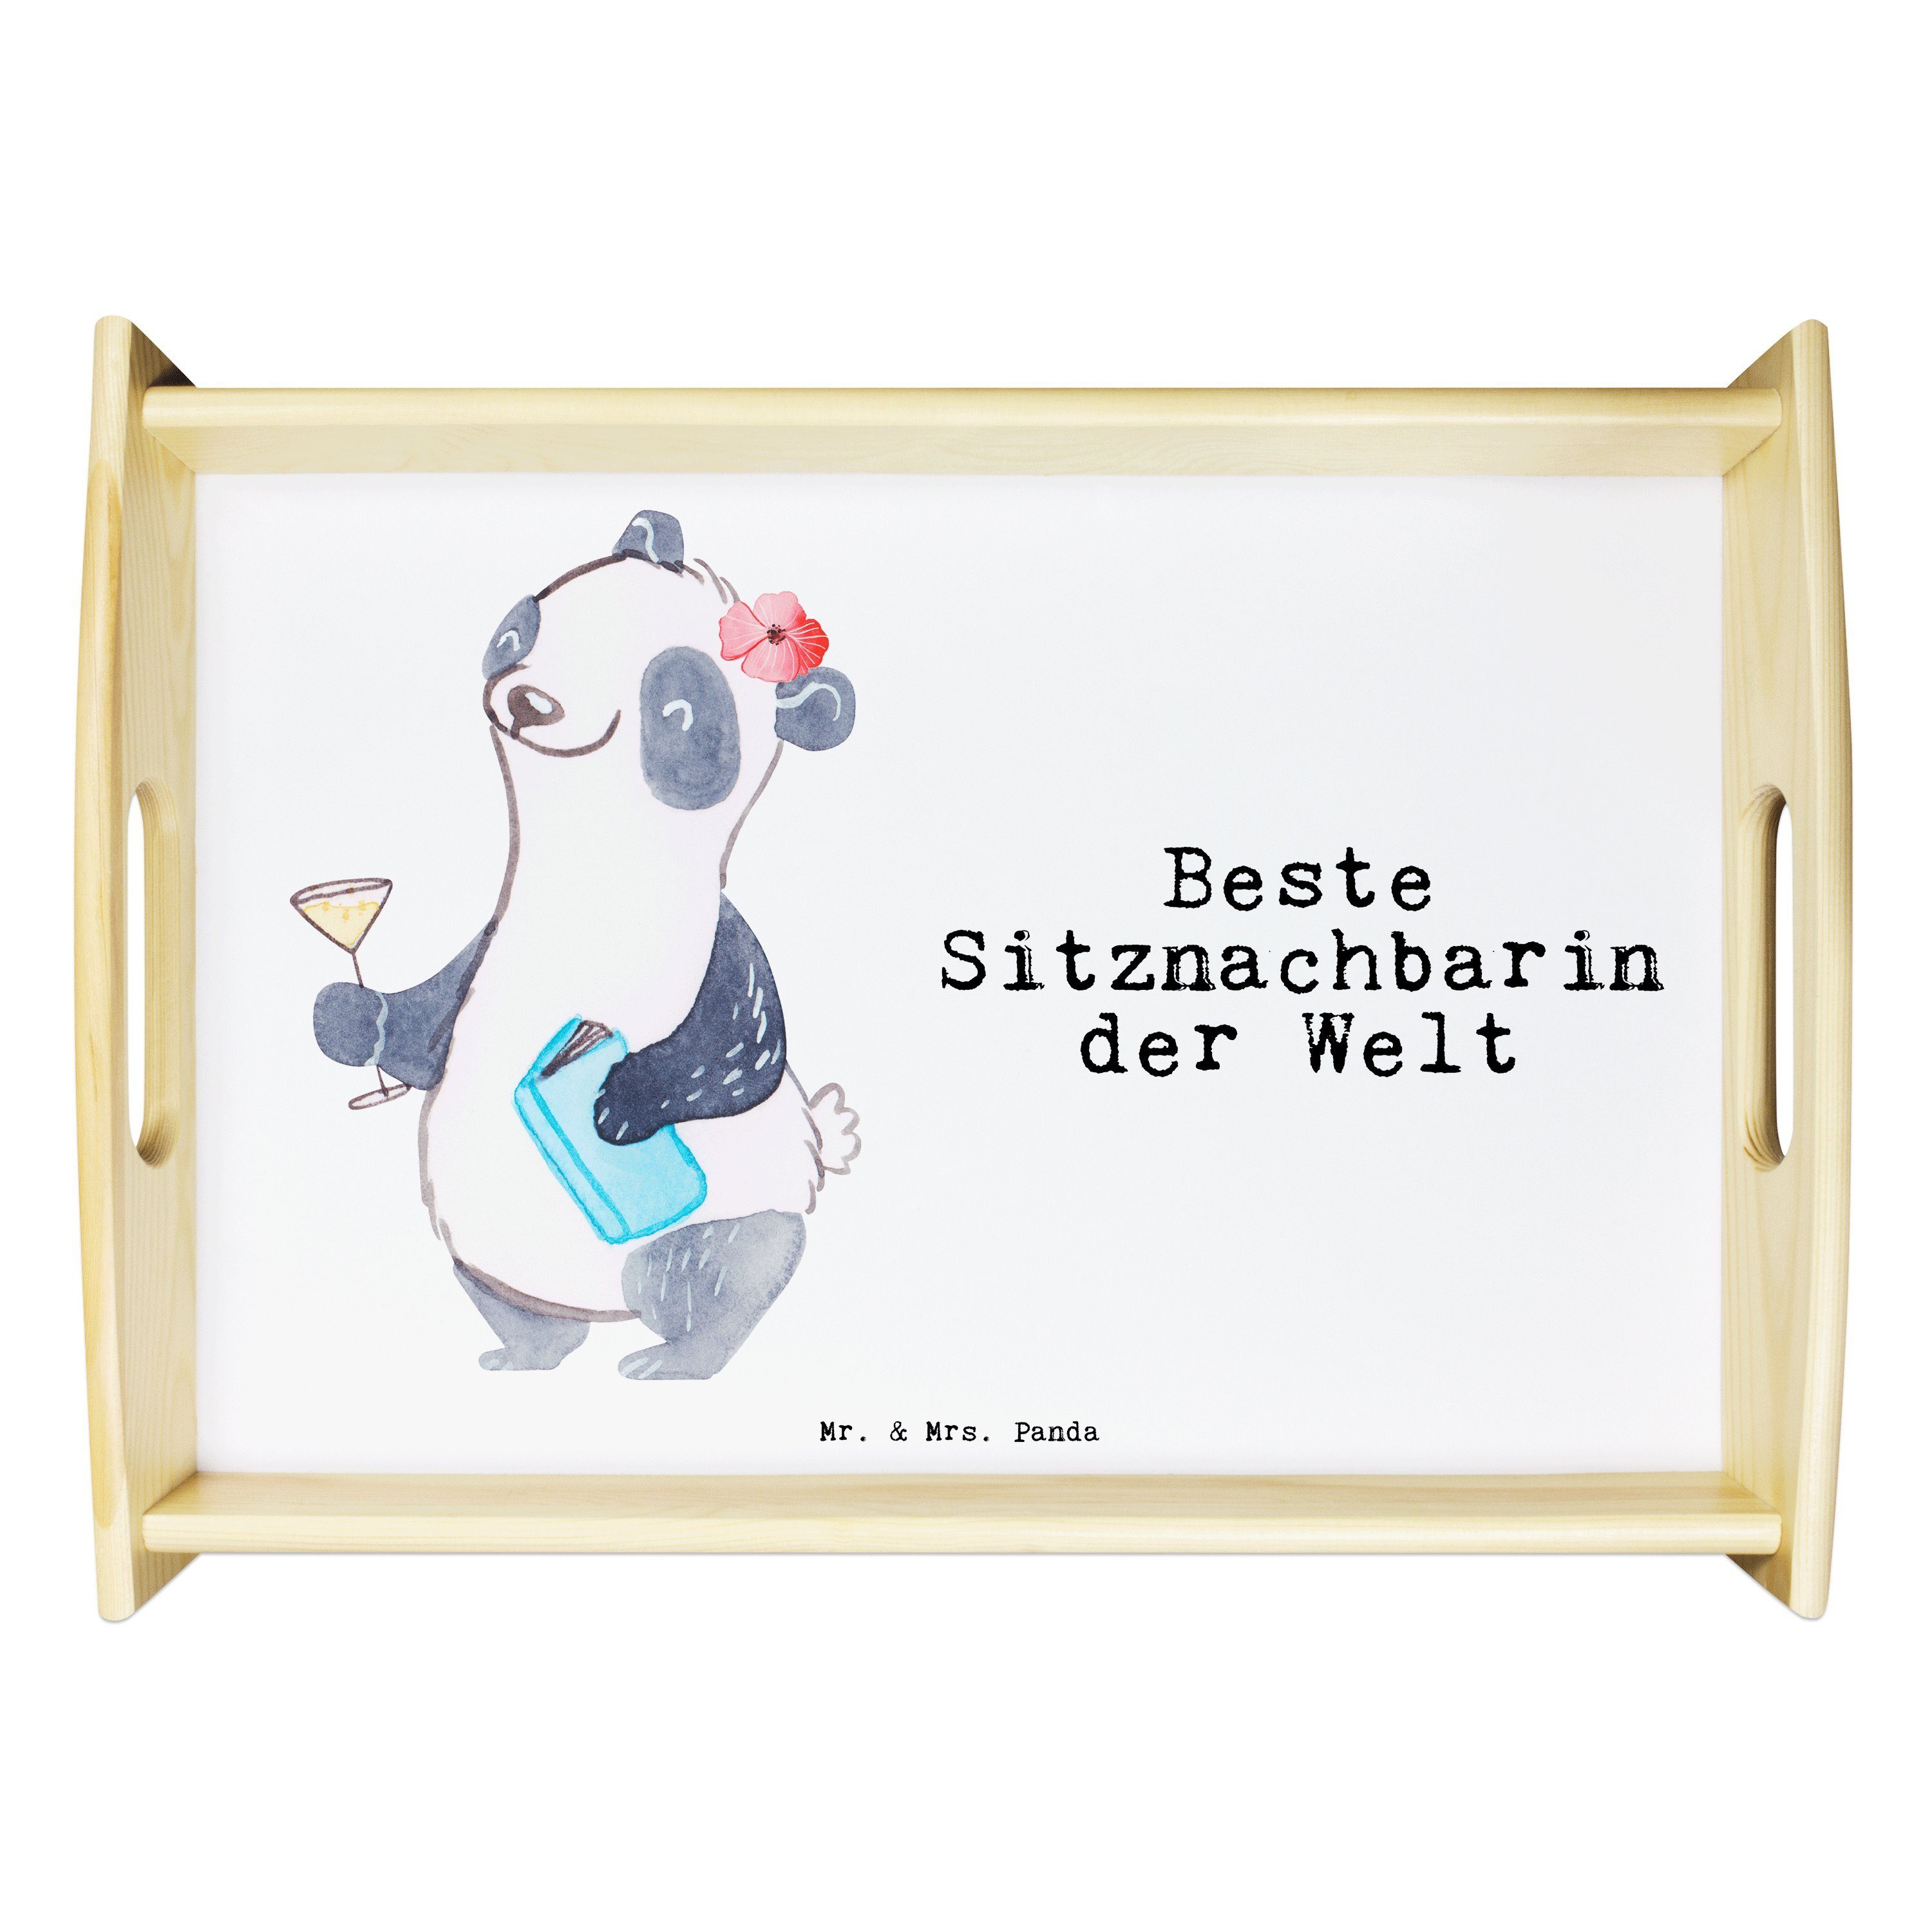 Mr. & Panda (1-tlg) Mrs. der Echtholz lasiert, Panda Tablett Geschenk, - Sitznachbarin Welt - Beste Weiß Stuhlnachbar, M